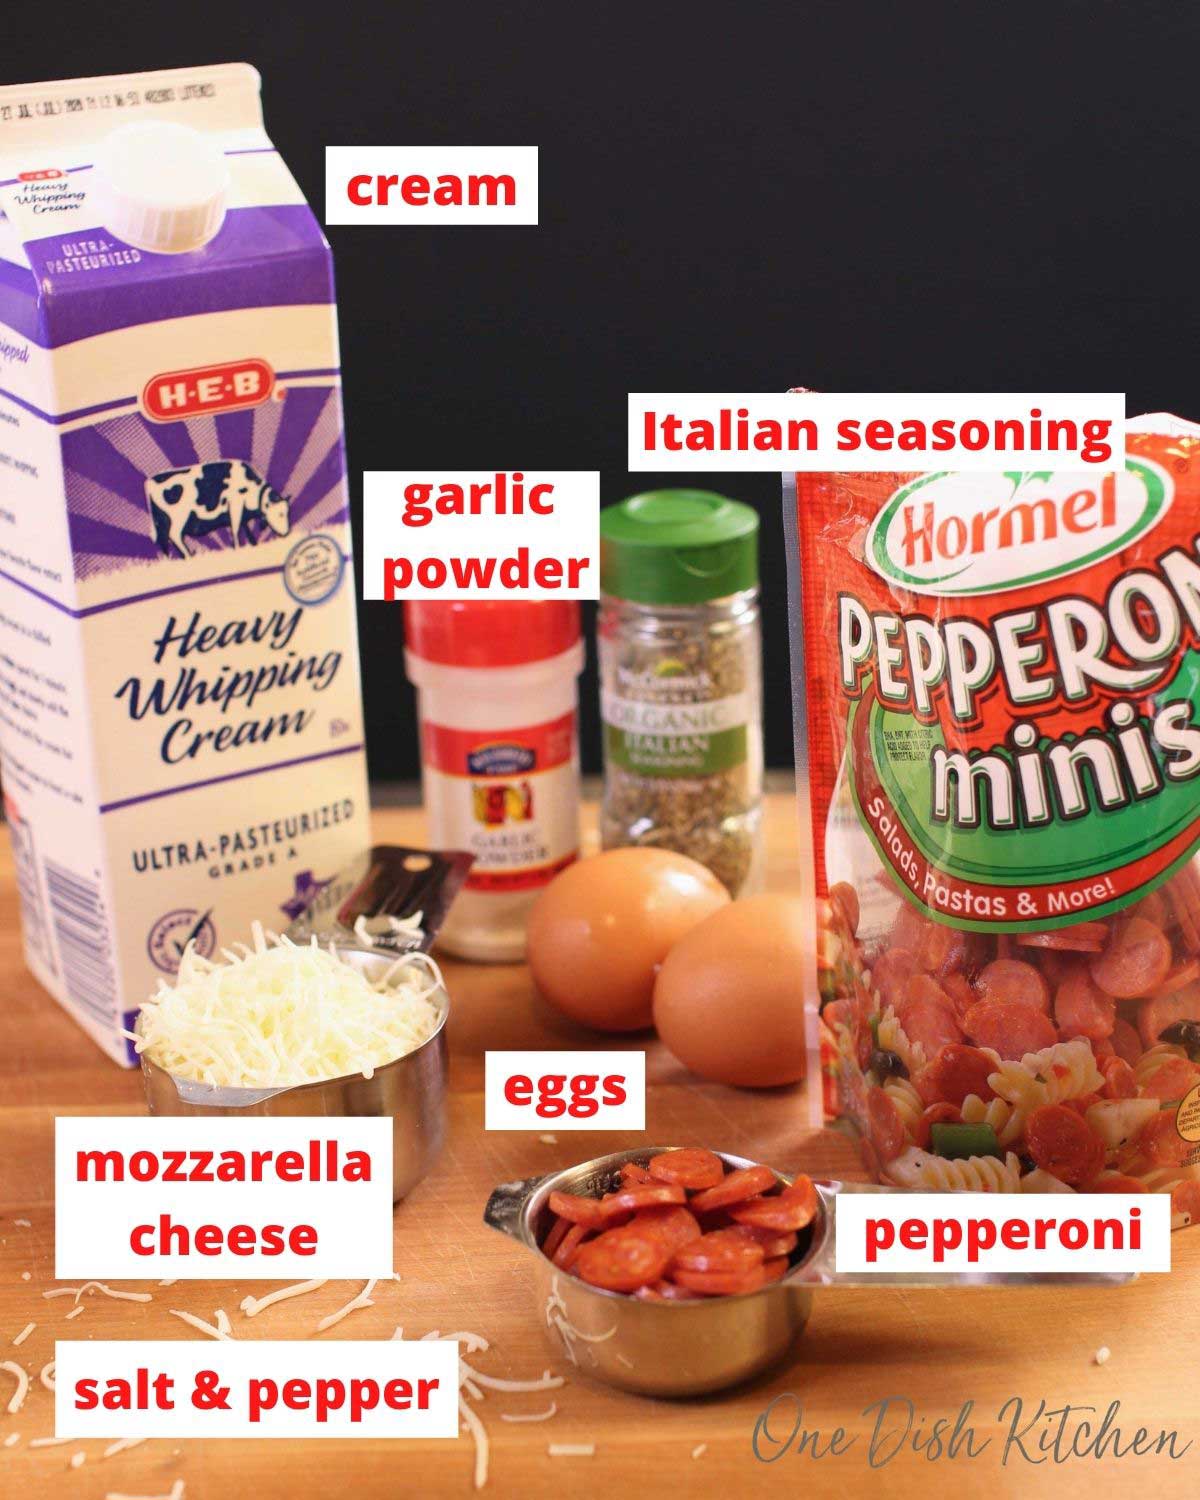 cream, pepperoni, mozzarella, seasonings, and eggs on a brown table.